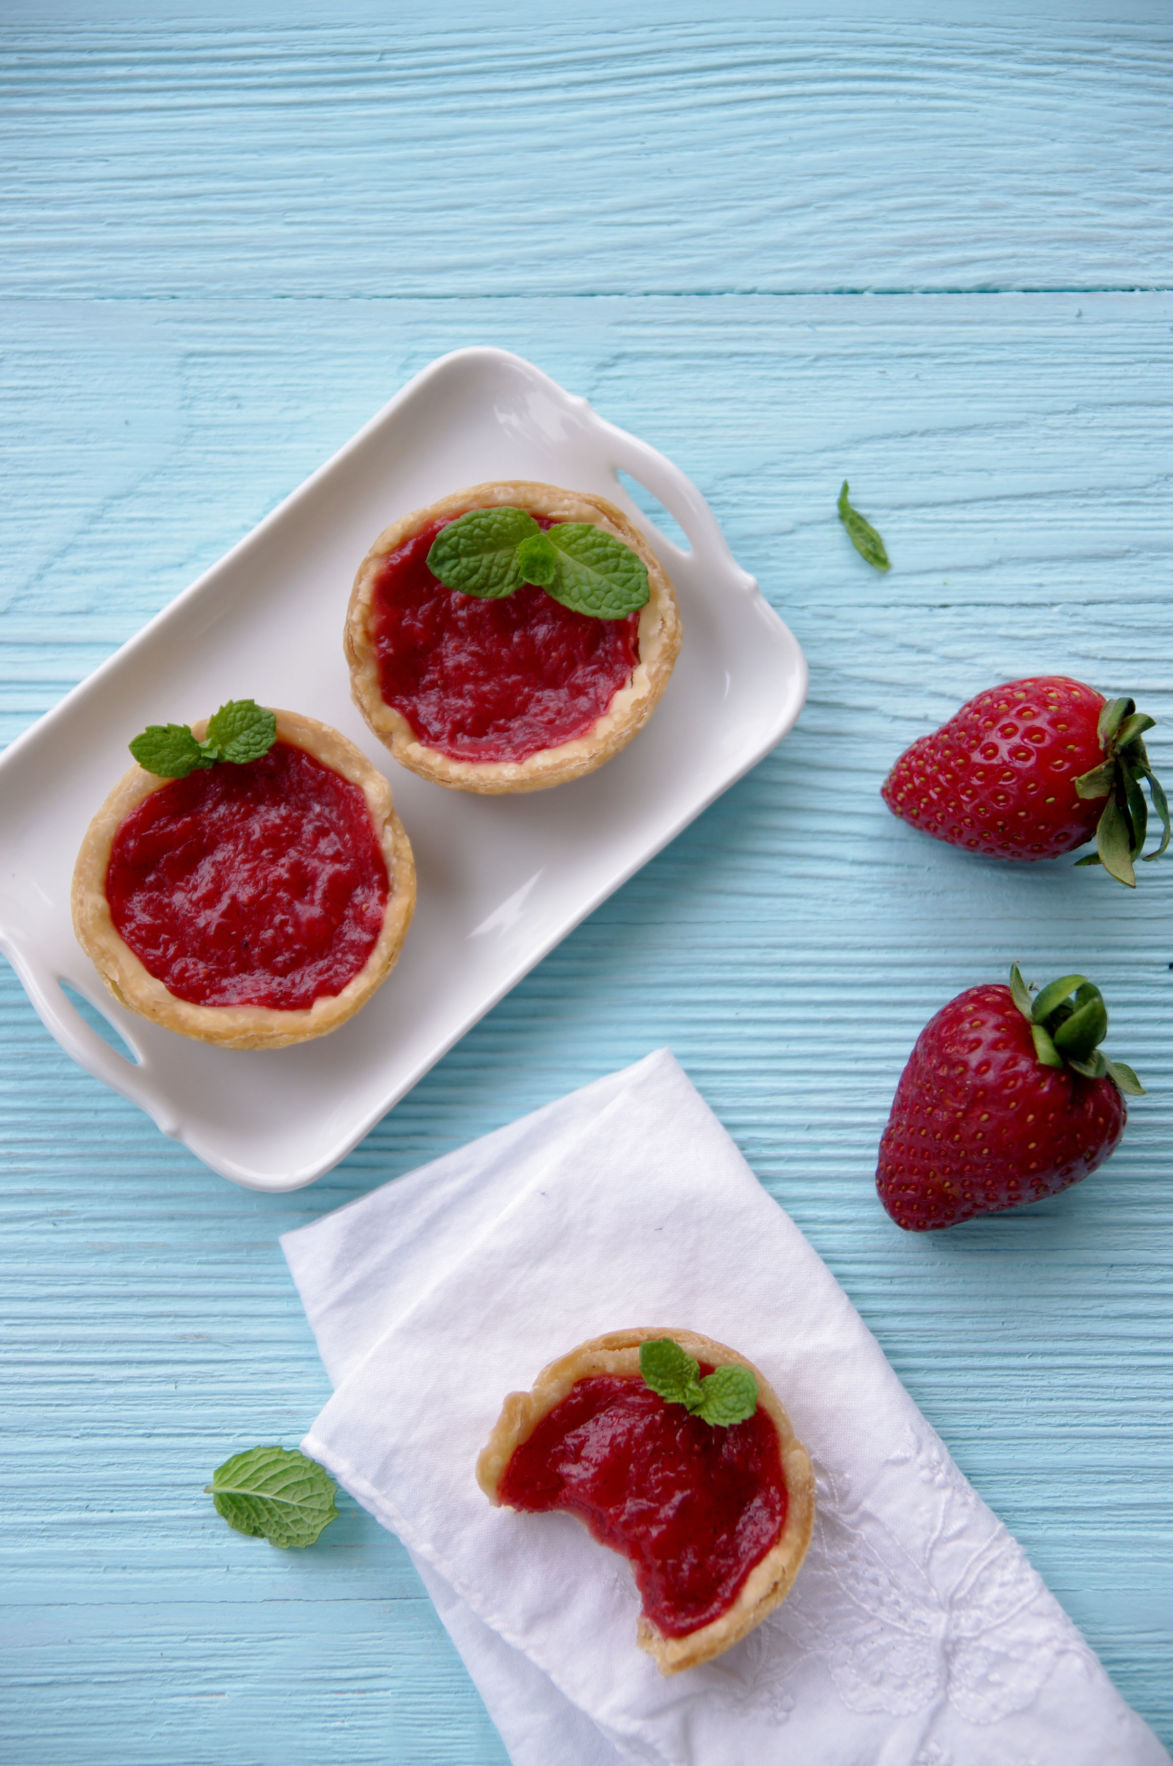 I Eat La.: Recipes for Strawberry Cream Palmiers, Strawberry Jam Tart ...